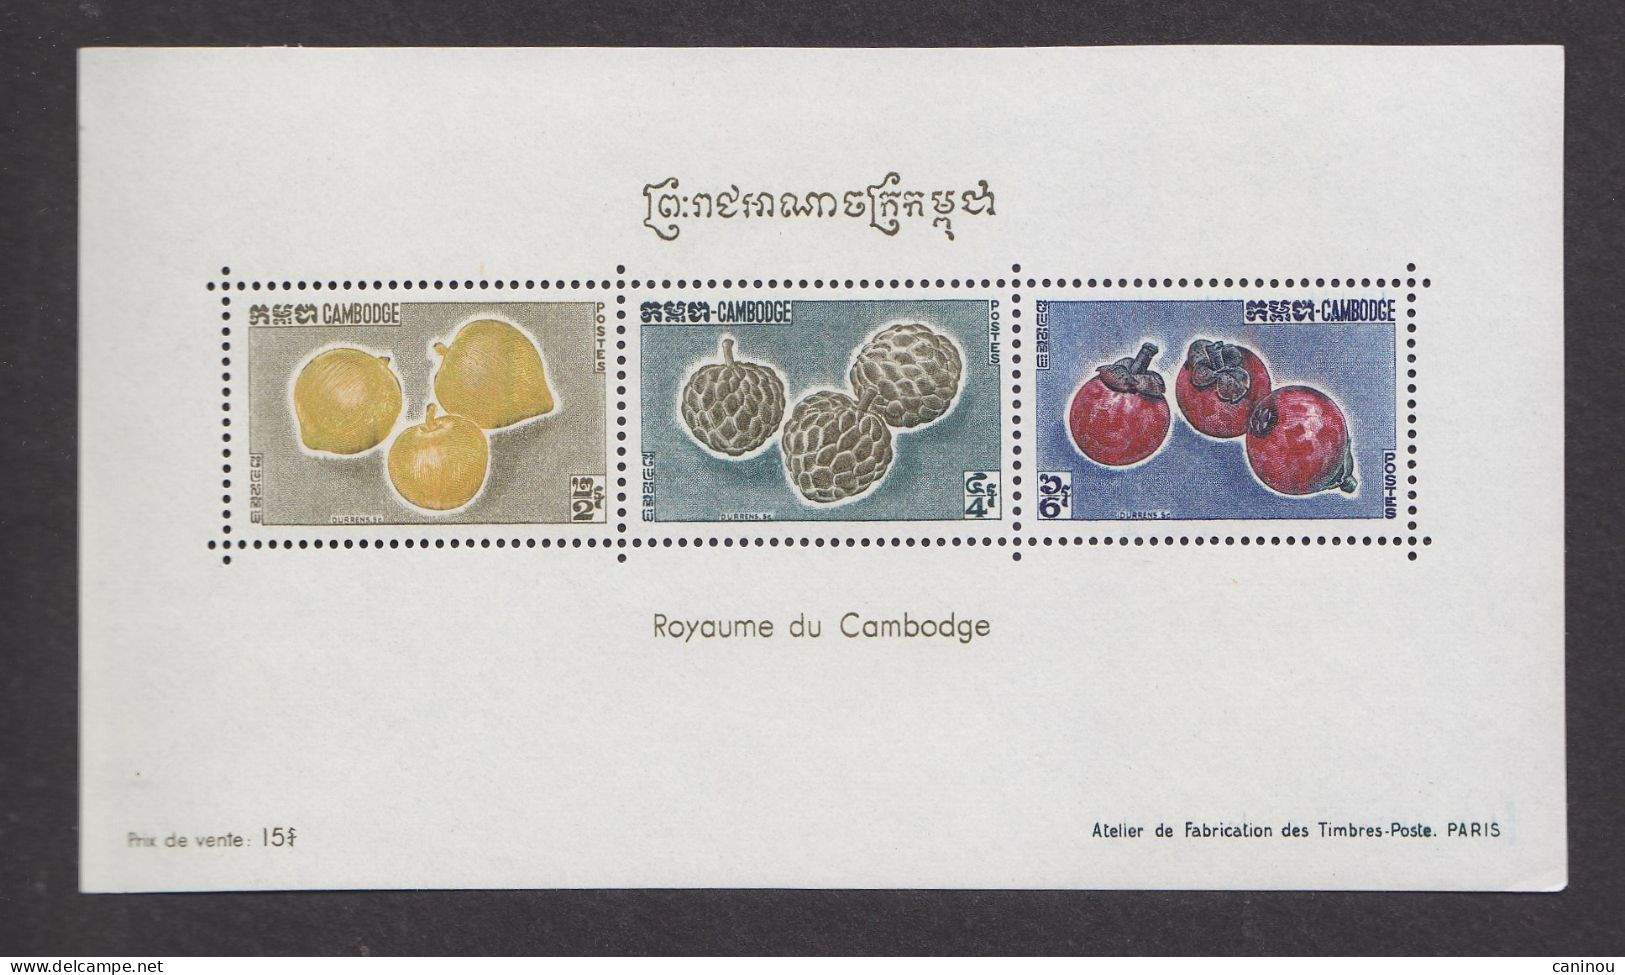 CAMBODGE BF 23 FRUITS 1962 NEUF SANS CHARNIERES - Cambodia